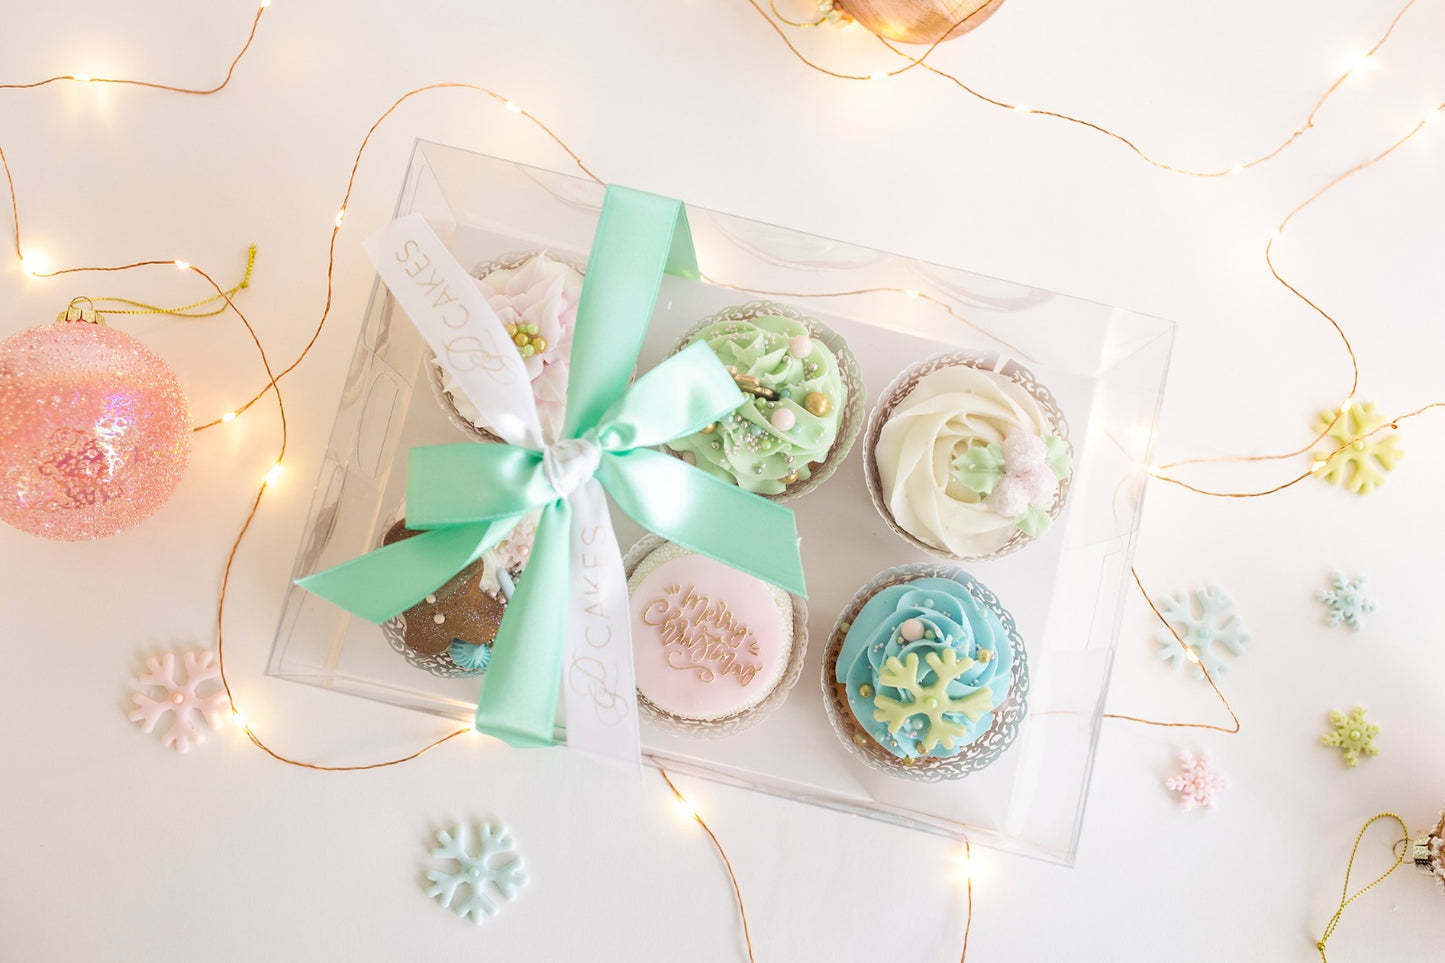 Jingles & Cupcakes